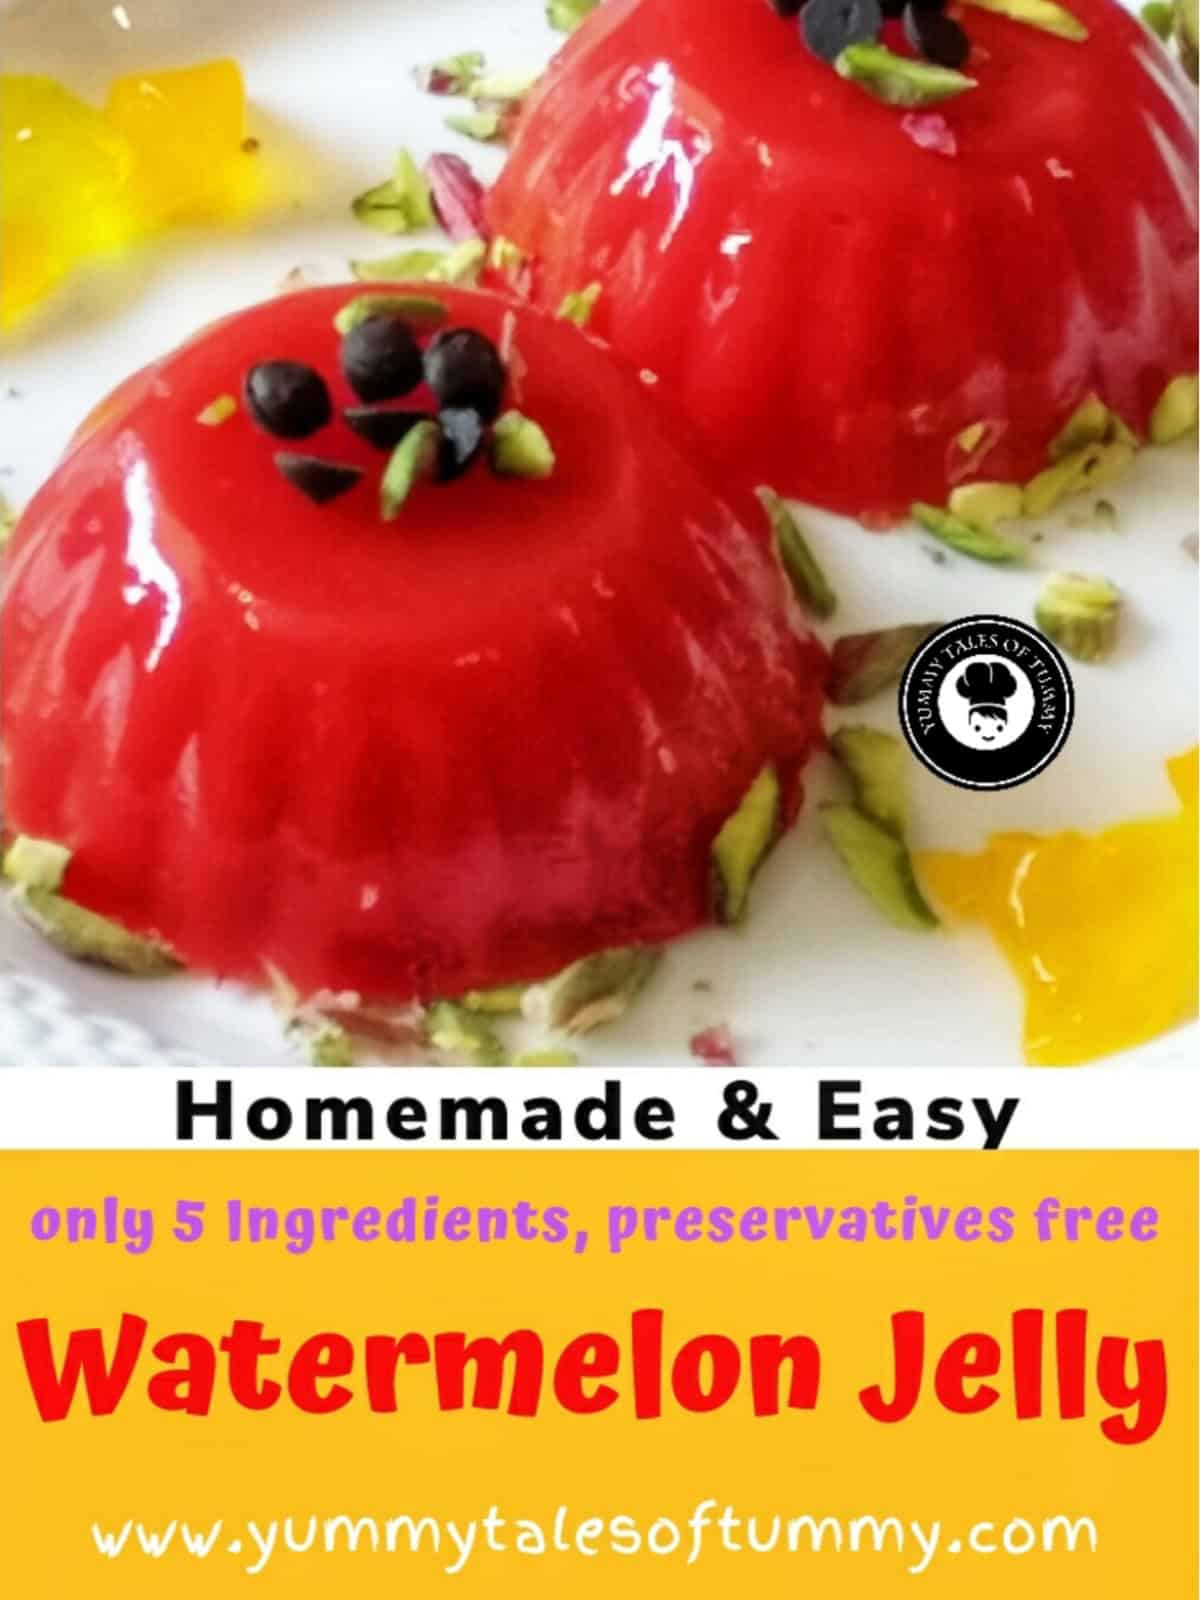 A homemade watermelon jelly recipe.